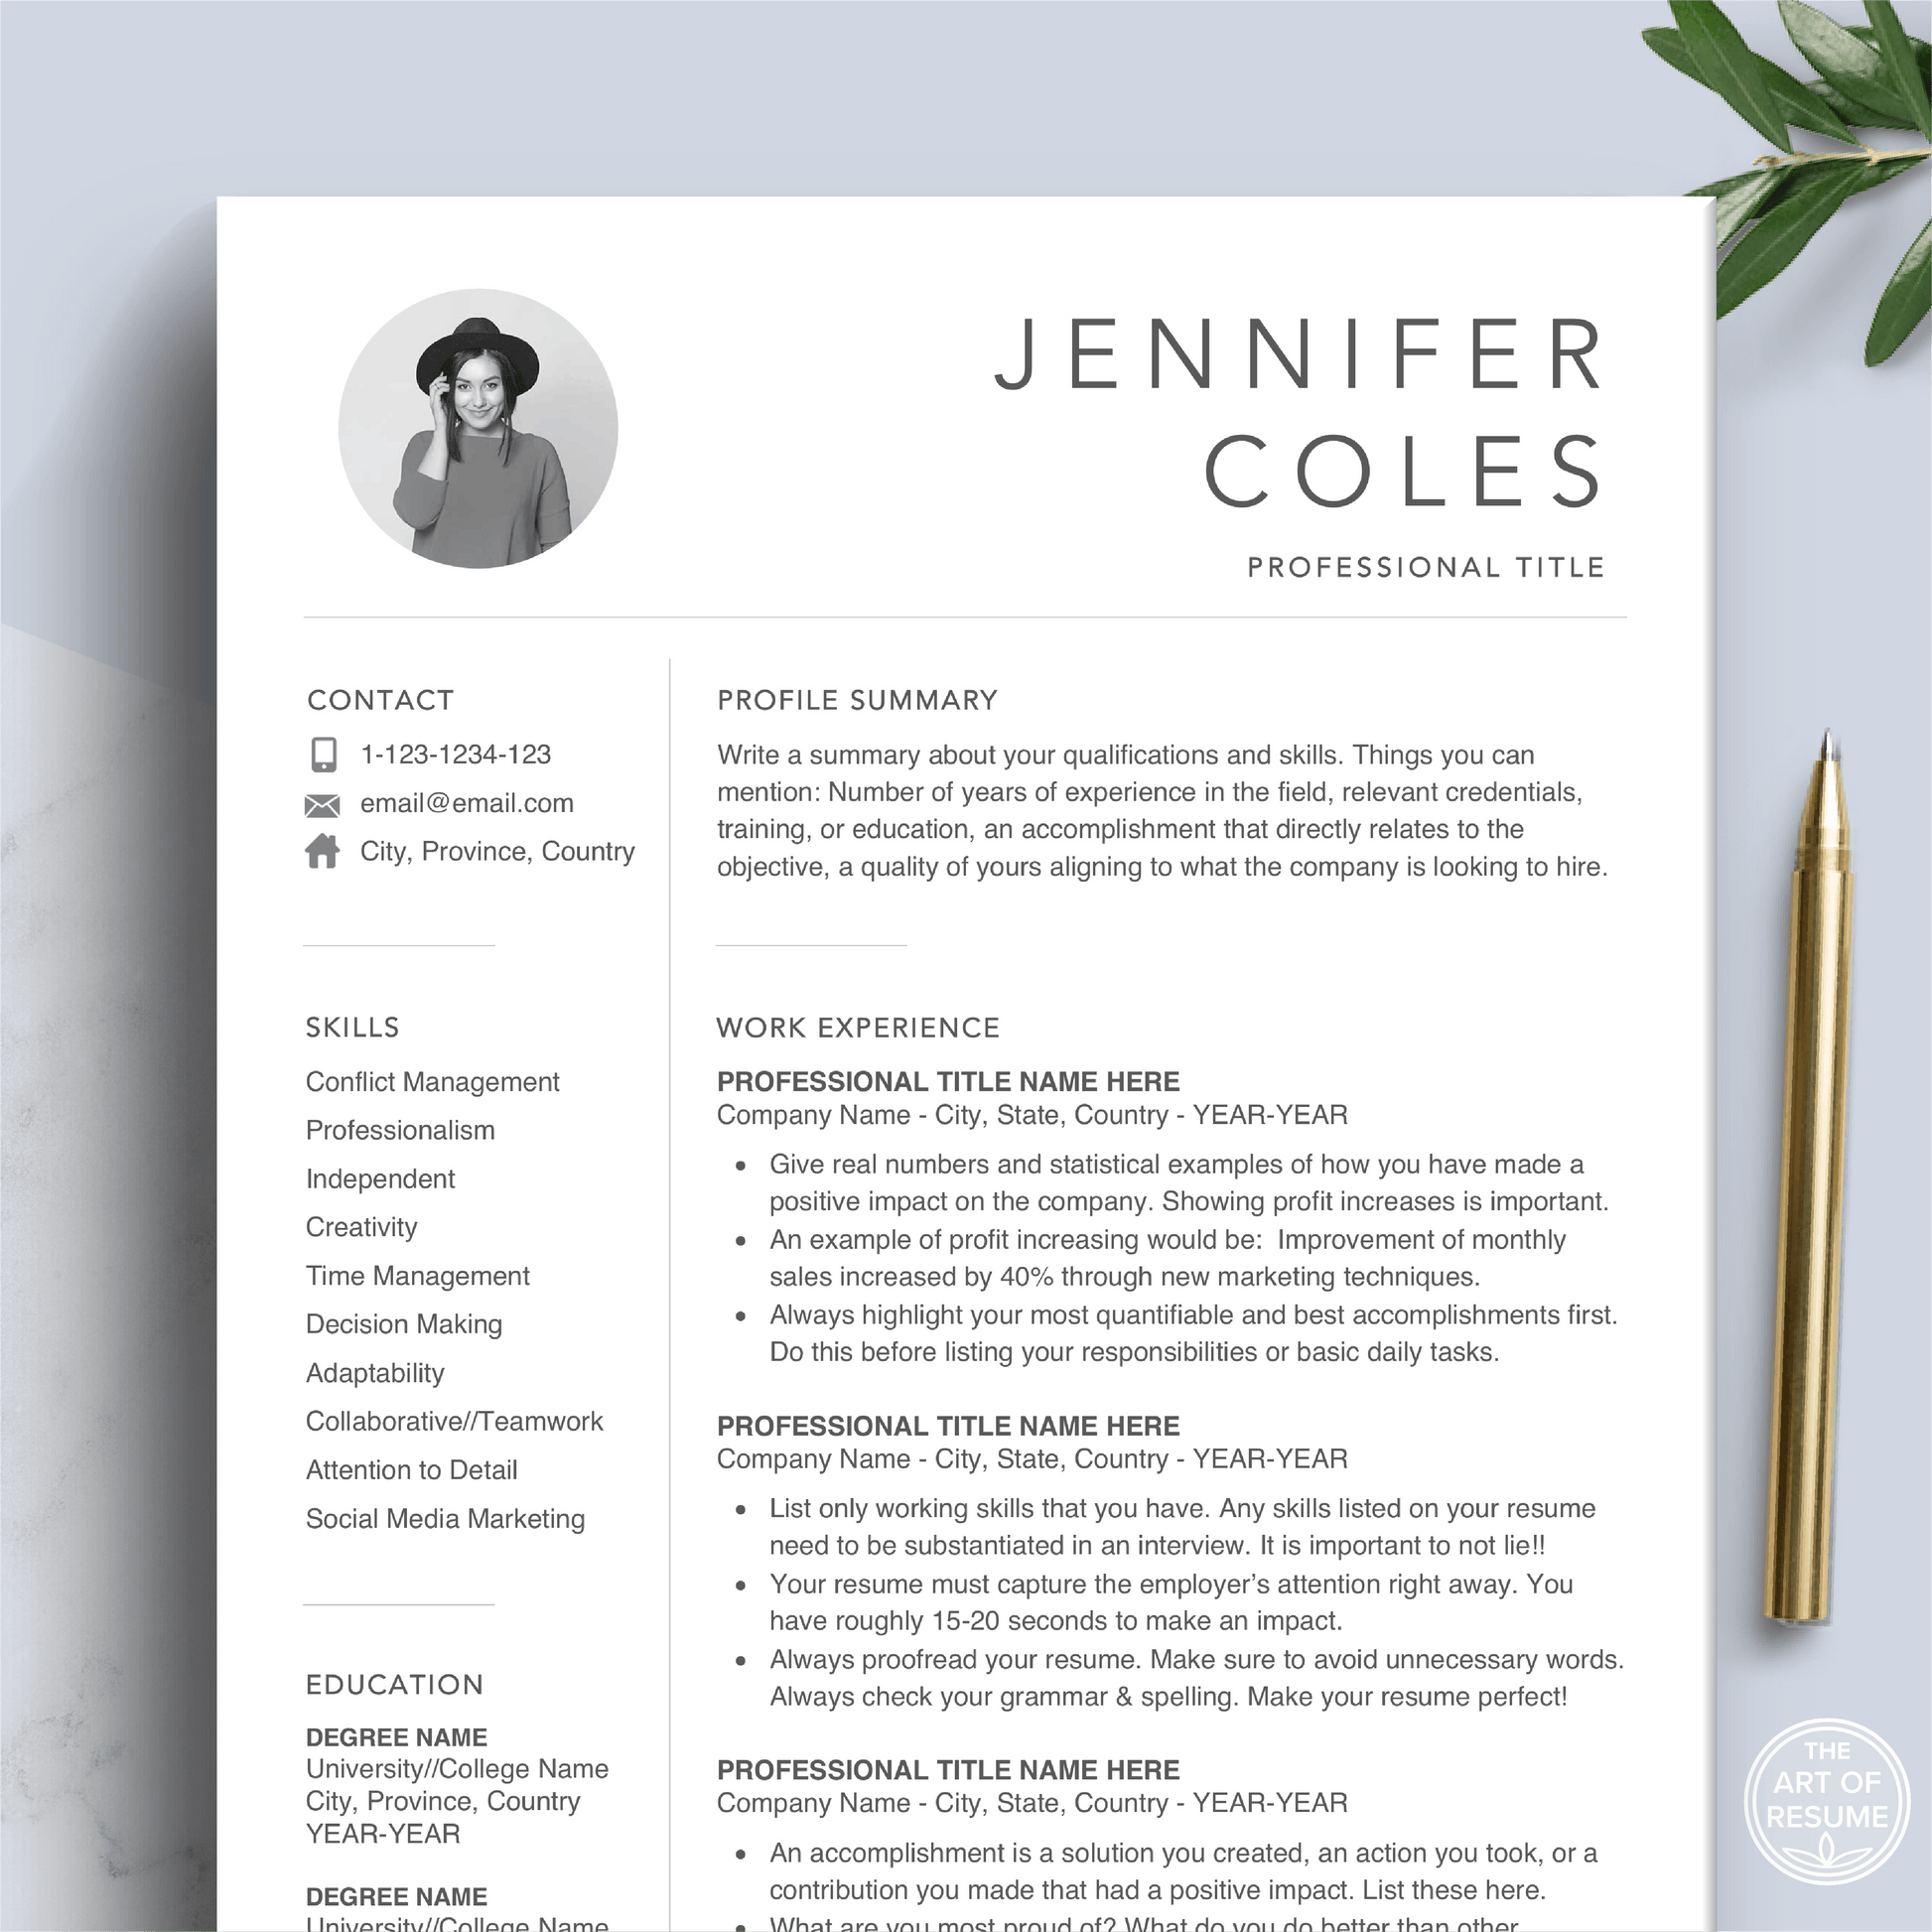 Creative Resume with Photo | Professional Resume Bundle - The Art of Resume